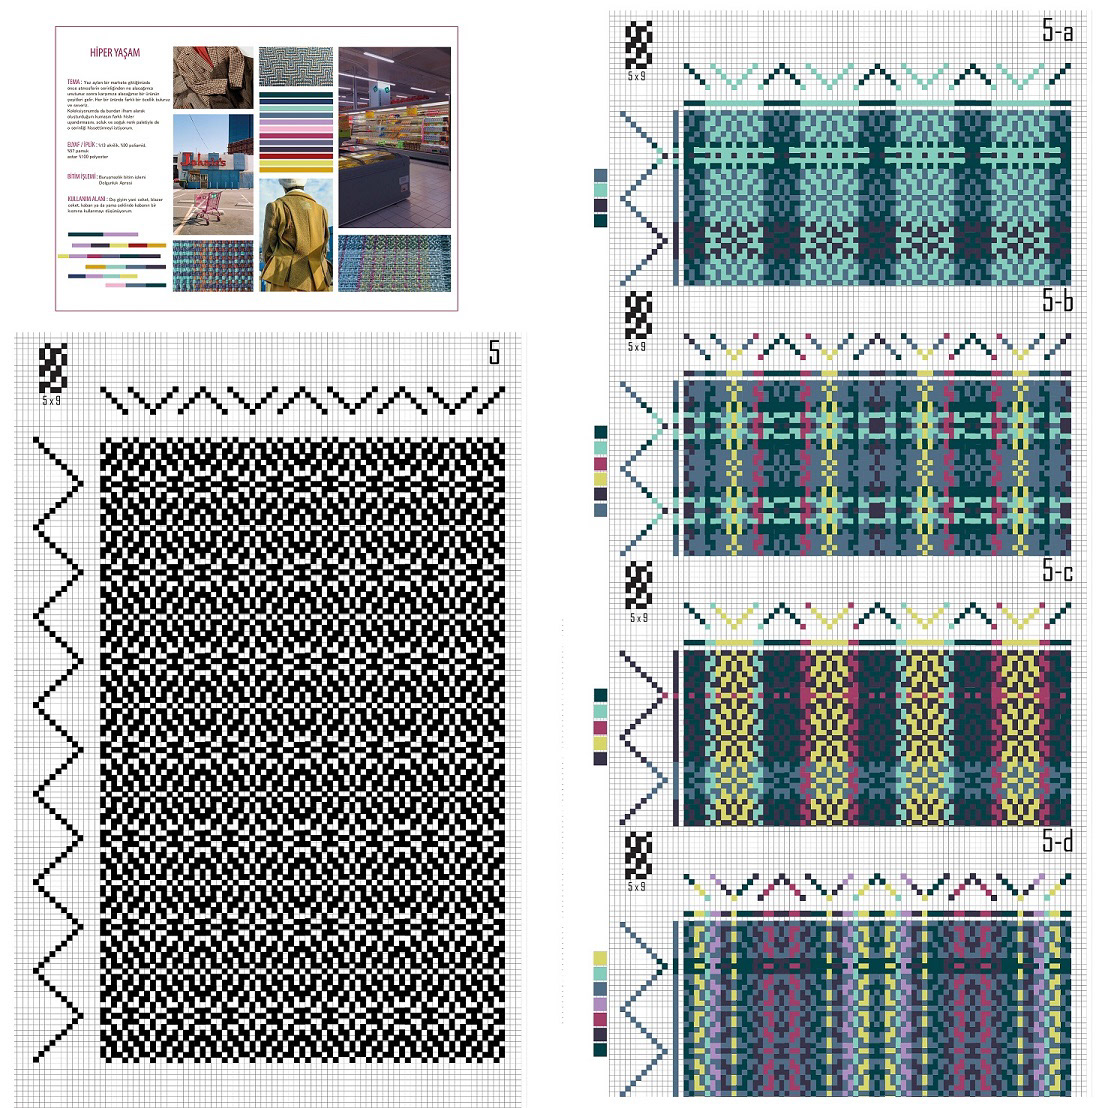 weaving textile design  Textiles fabric Fashion  pattern design weave jacquard weaving design